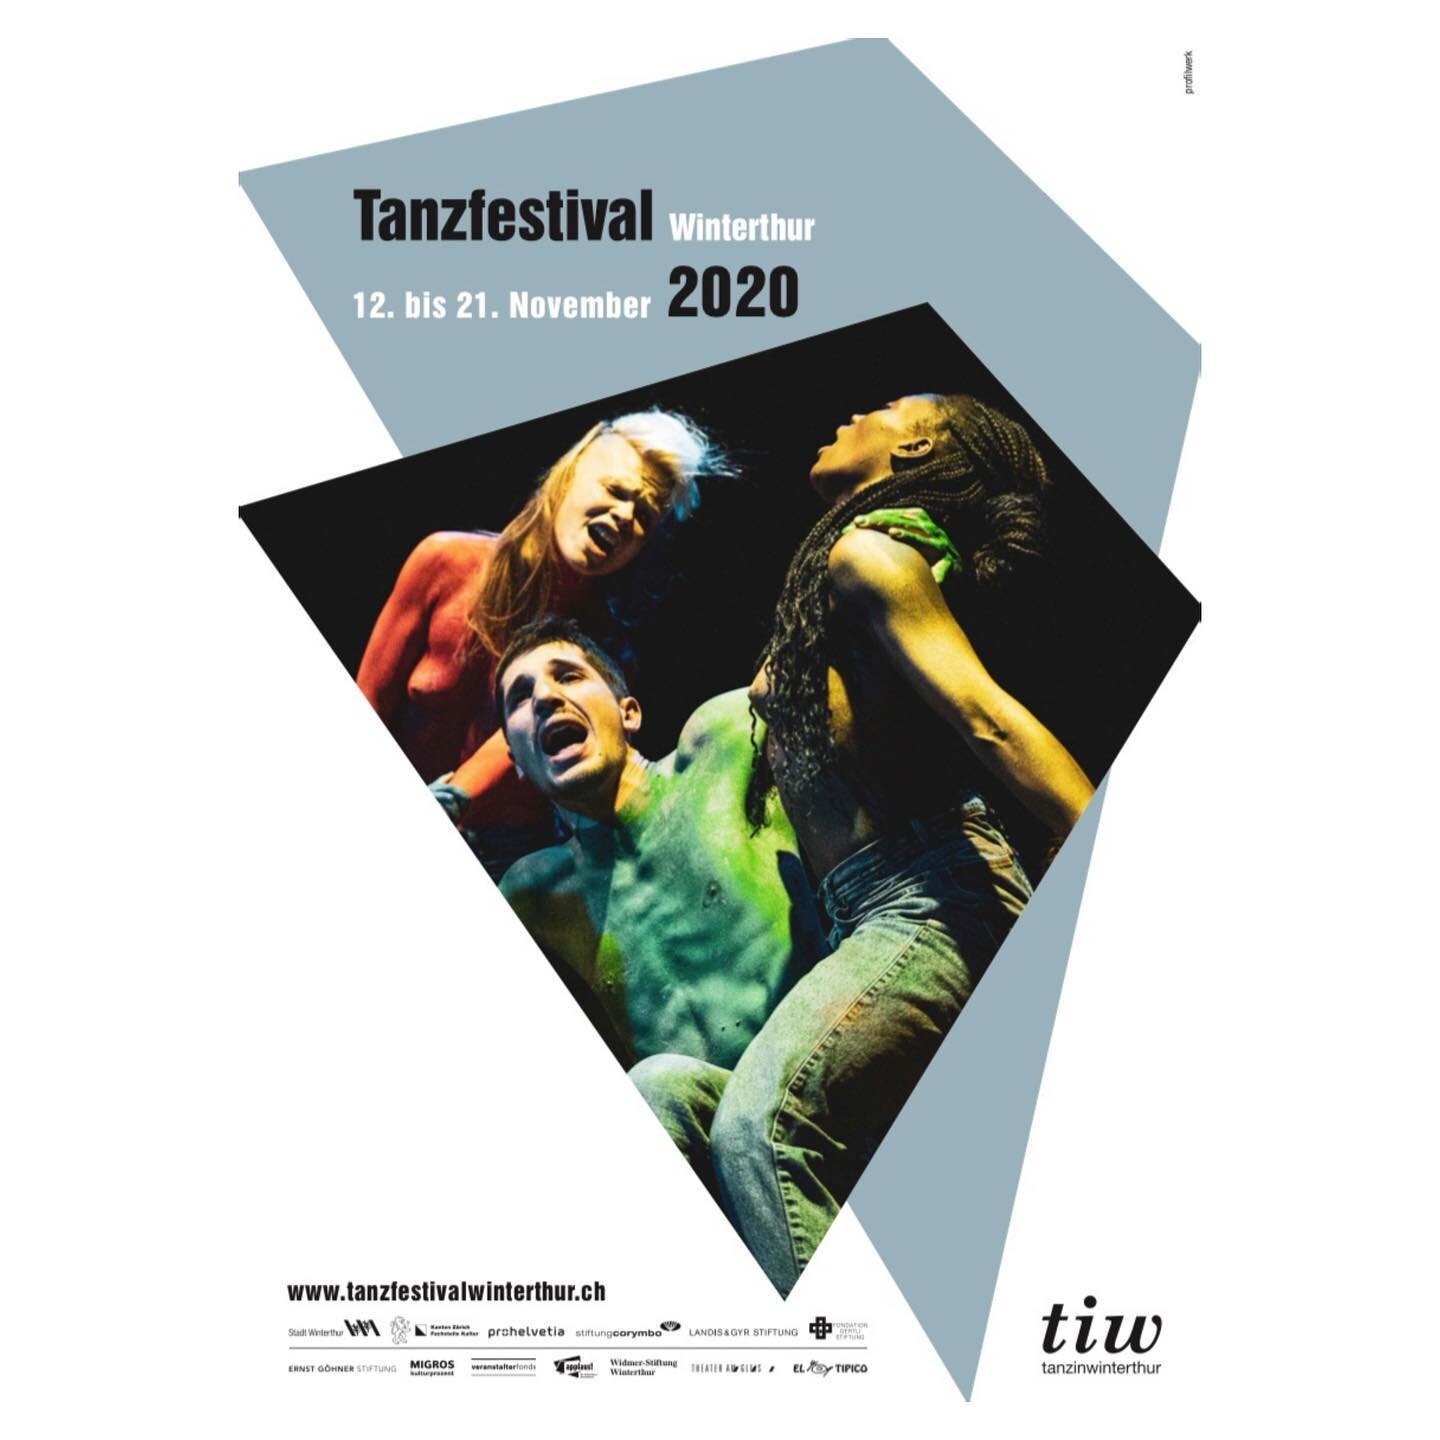 Tanzfestival Winterthurg
Novembre 2020

📷 Julie Masson

#tanzfestival #danse #cienicoleseiler 

@seilernicole @aurewachter @kaie_da